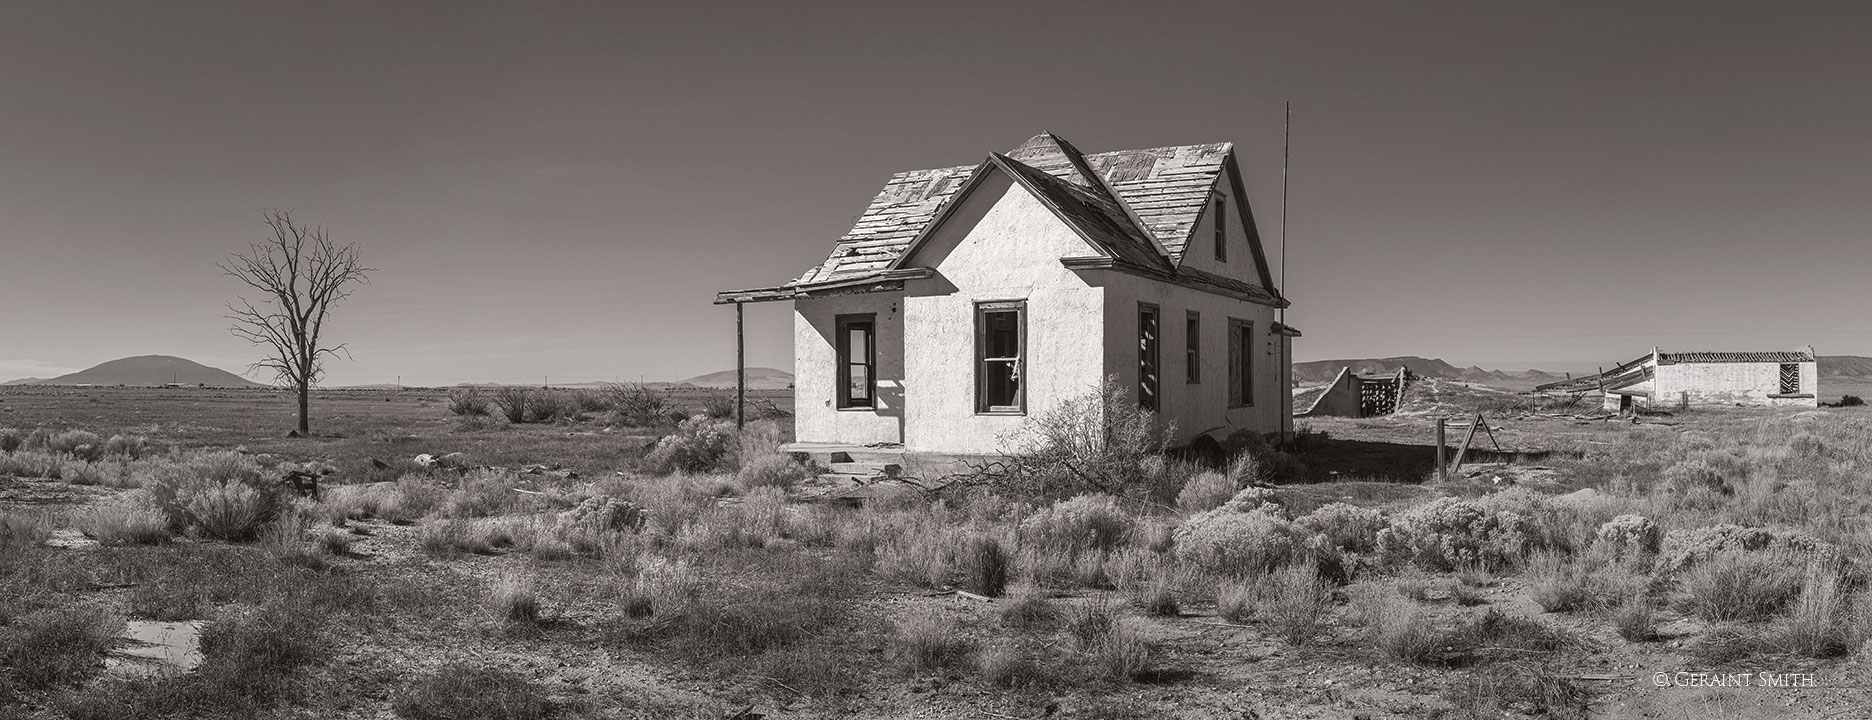 Abandoned homestead, Colorado.